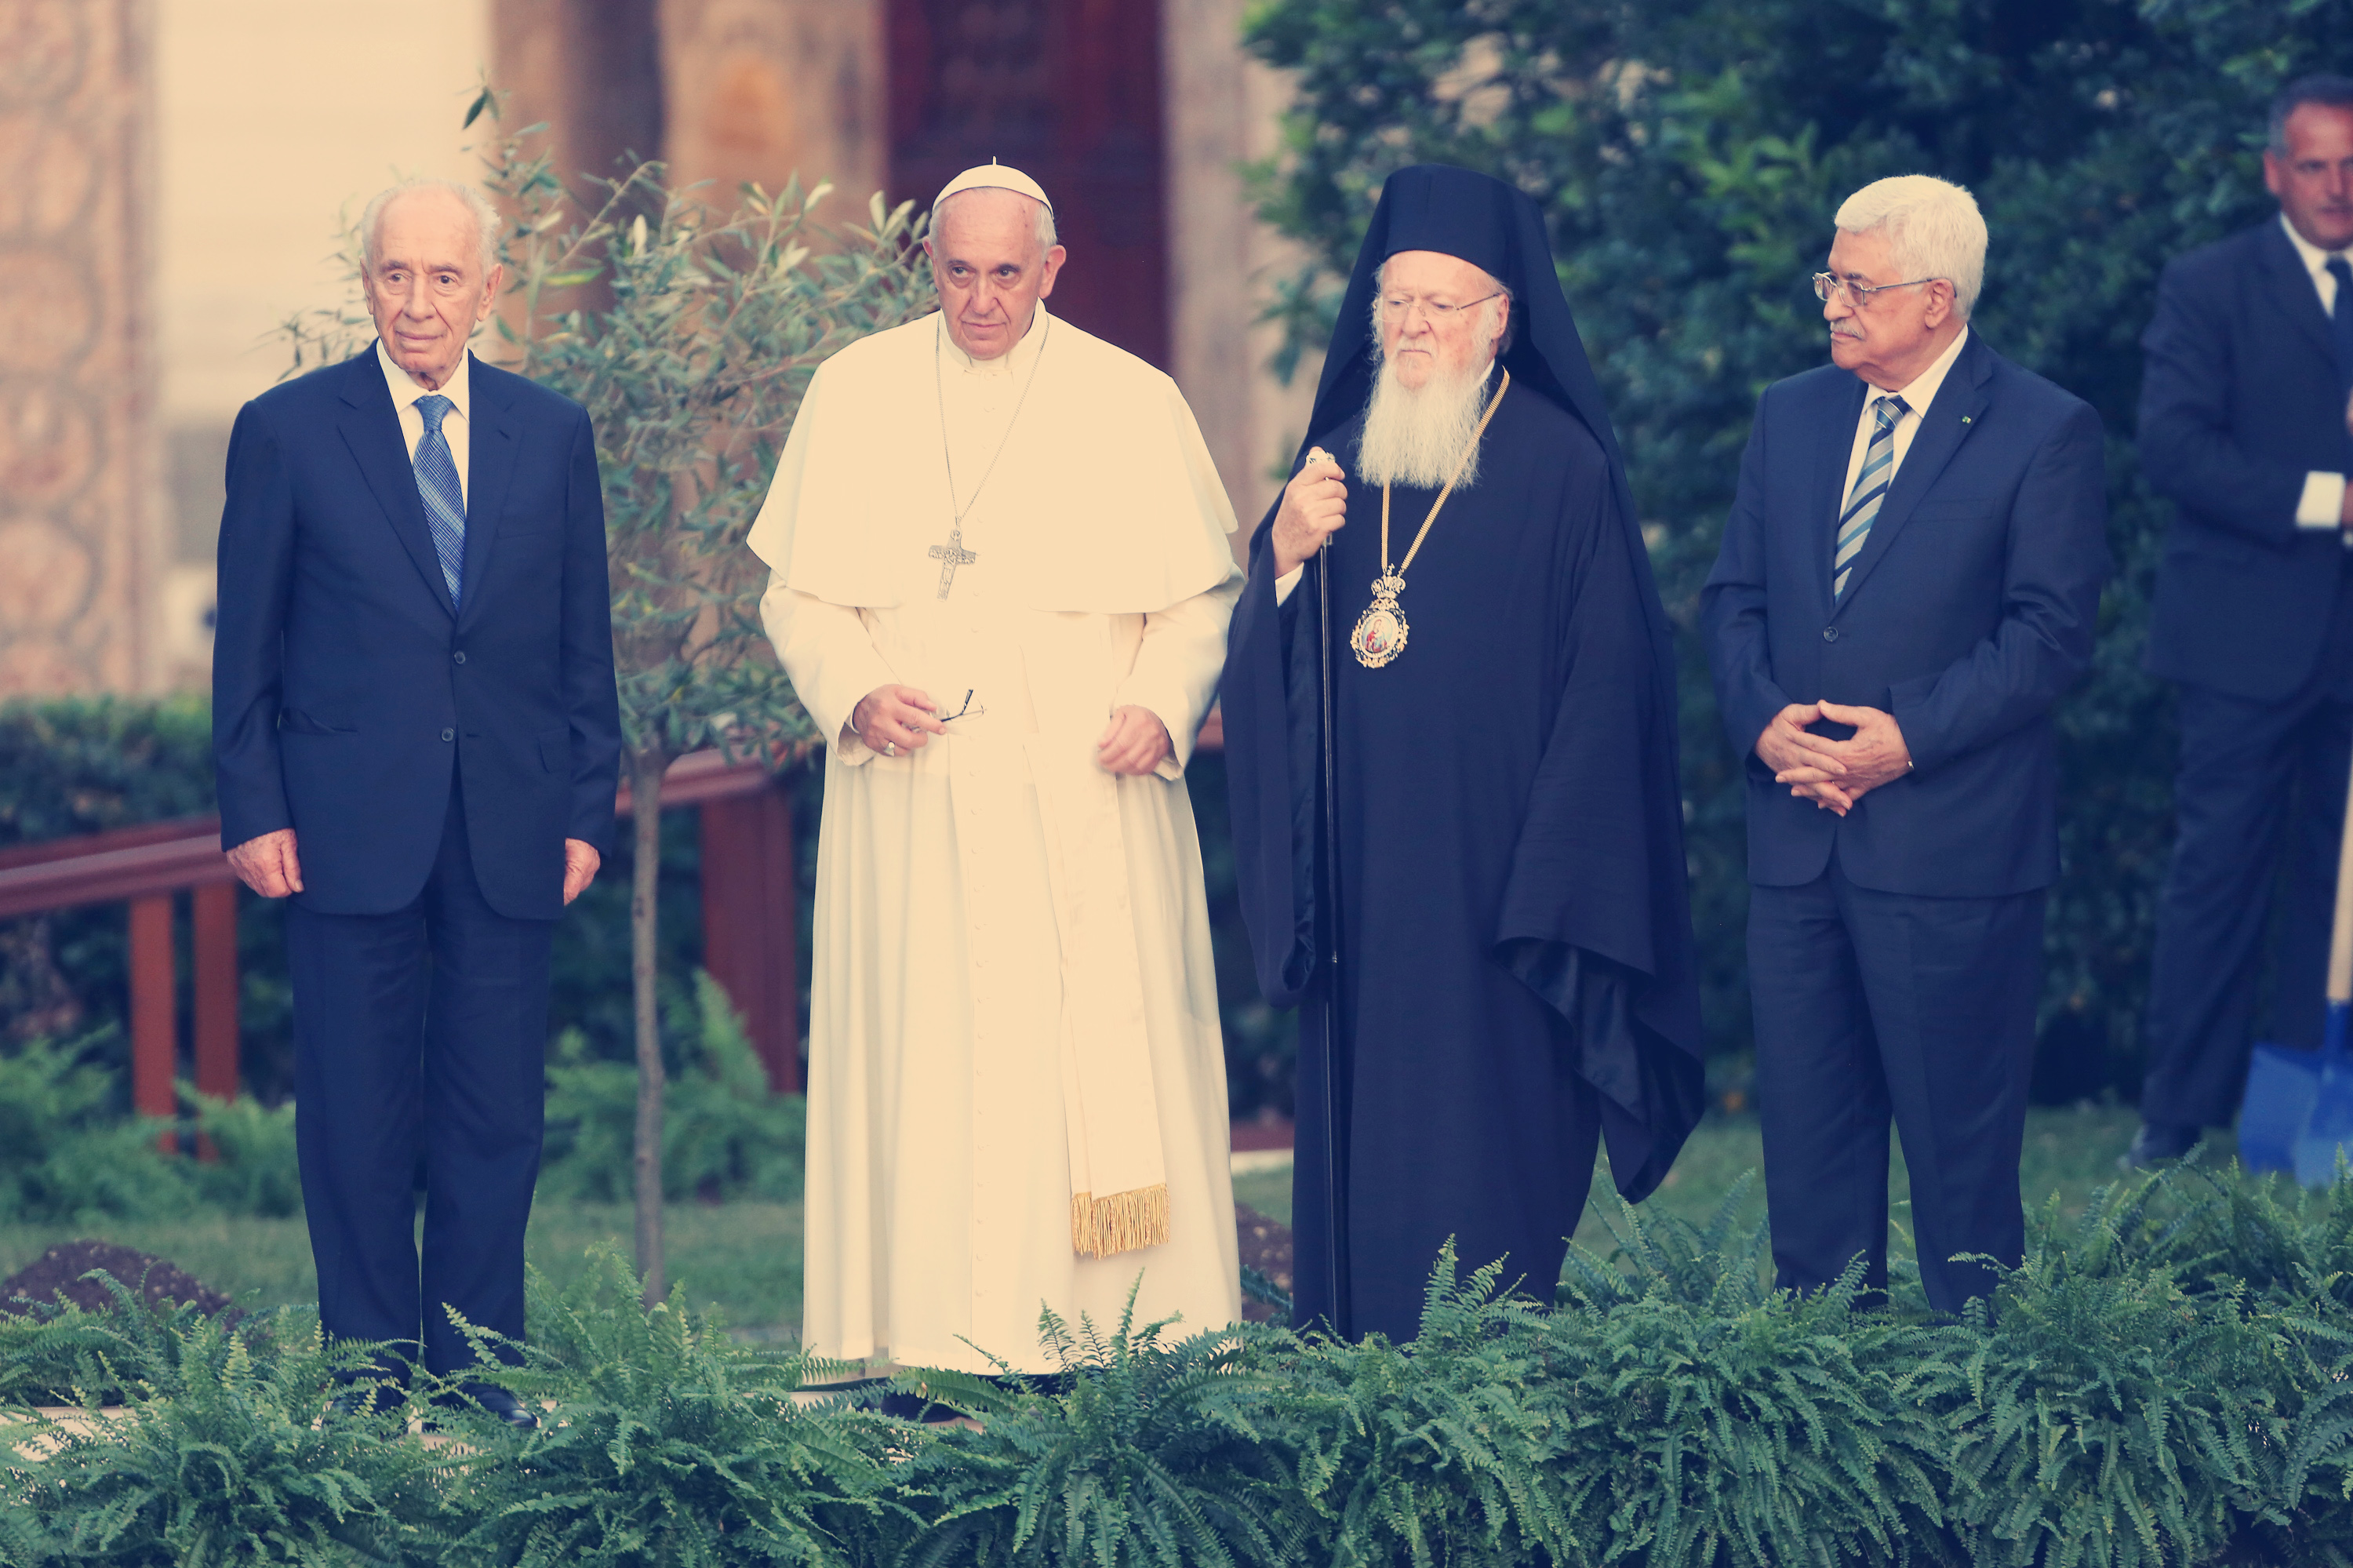 Pope Francis Meets Israeli President Shimon Peres, Palestinian President Mahmoud Abbas And Patriarch Bartholomaios I To Pray For Peace